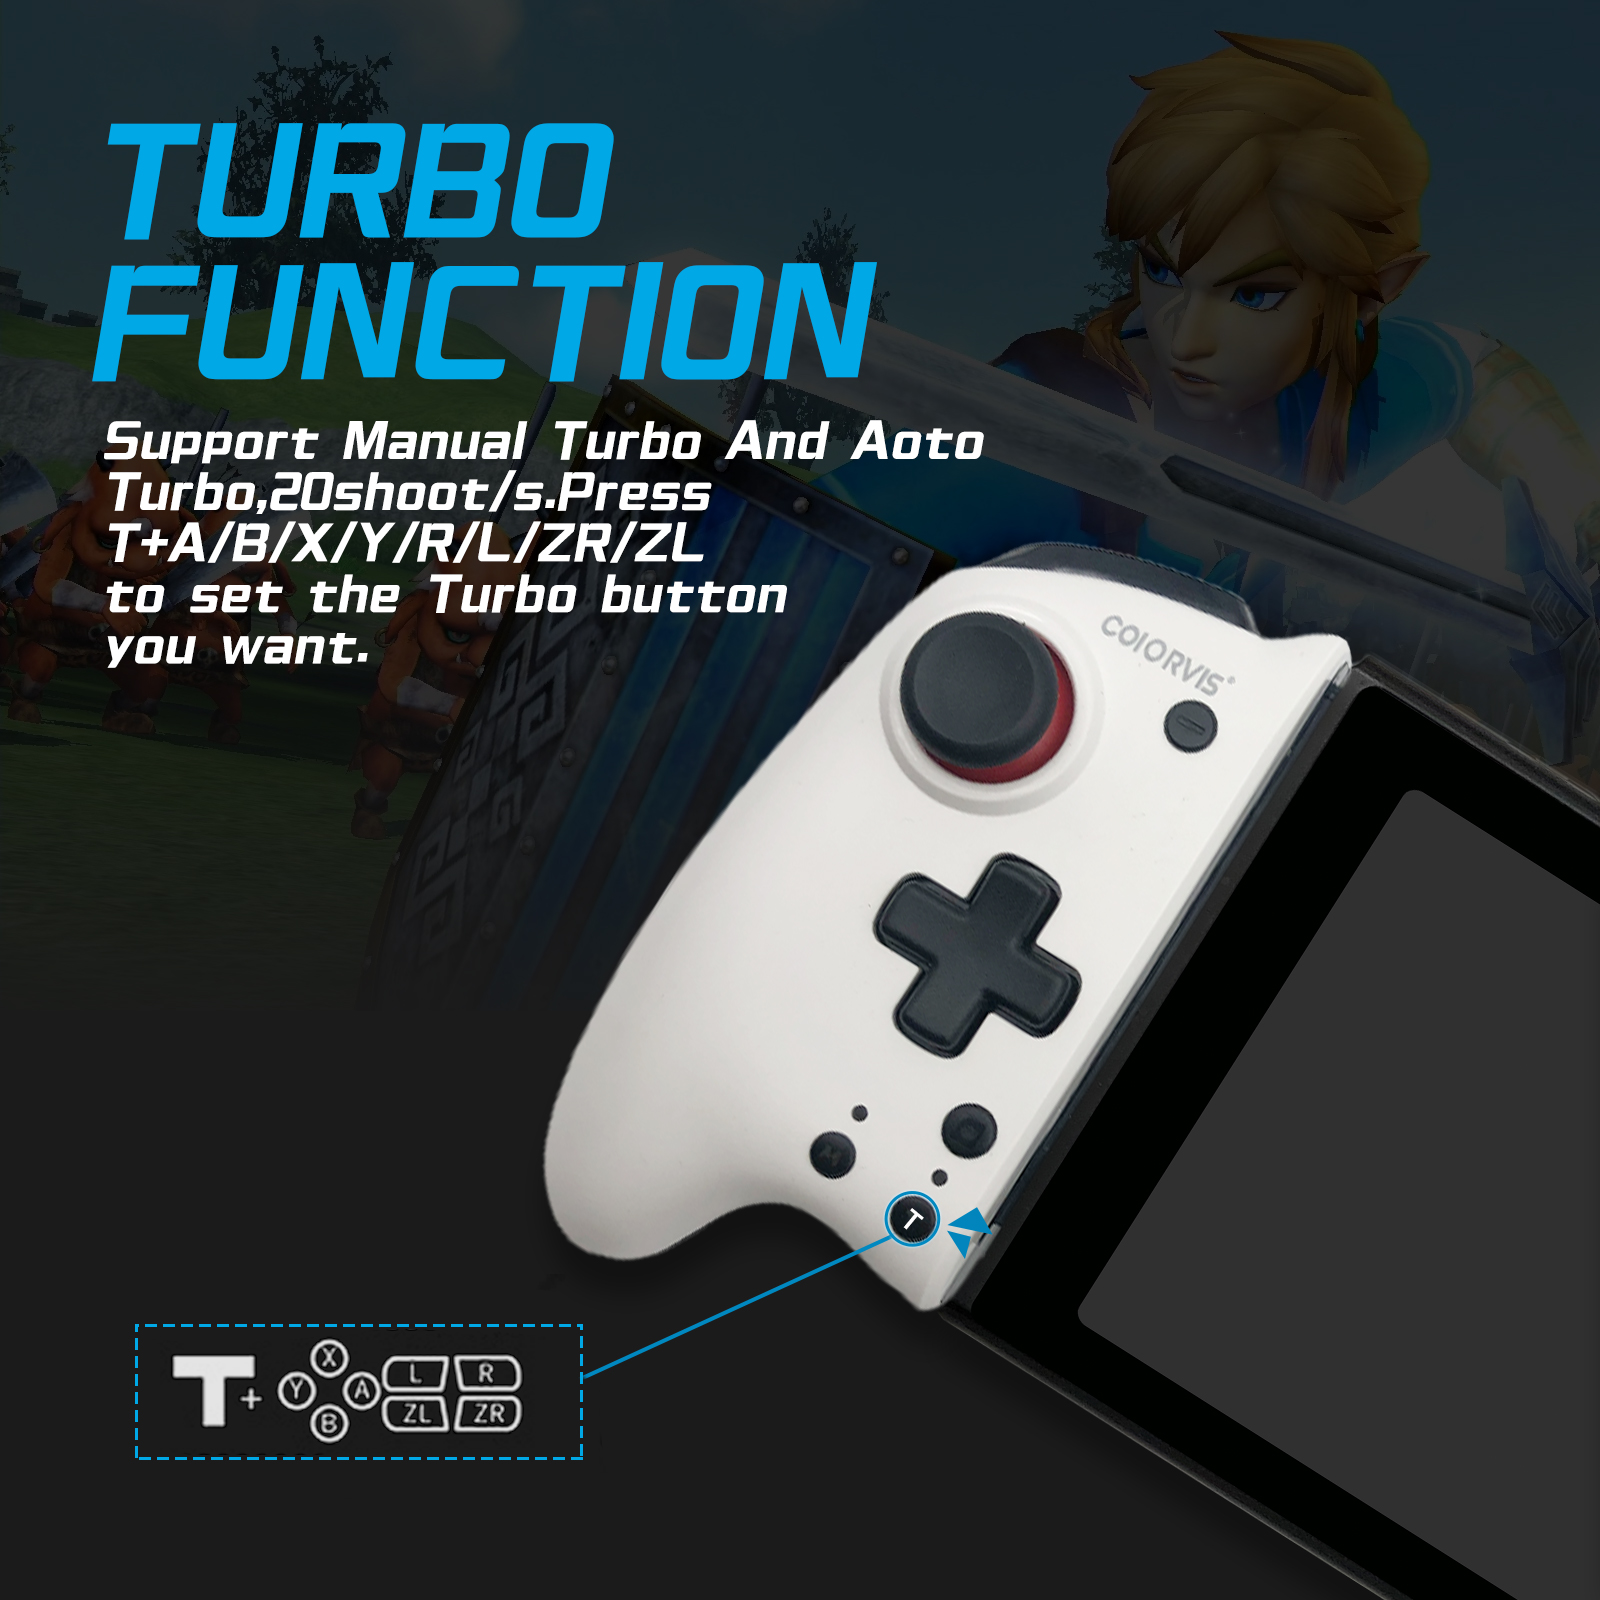 Turbo function: manual turbo and auto turbo.